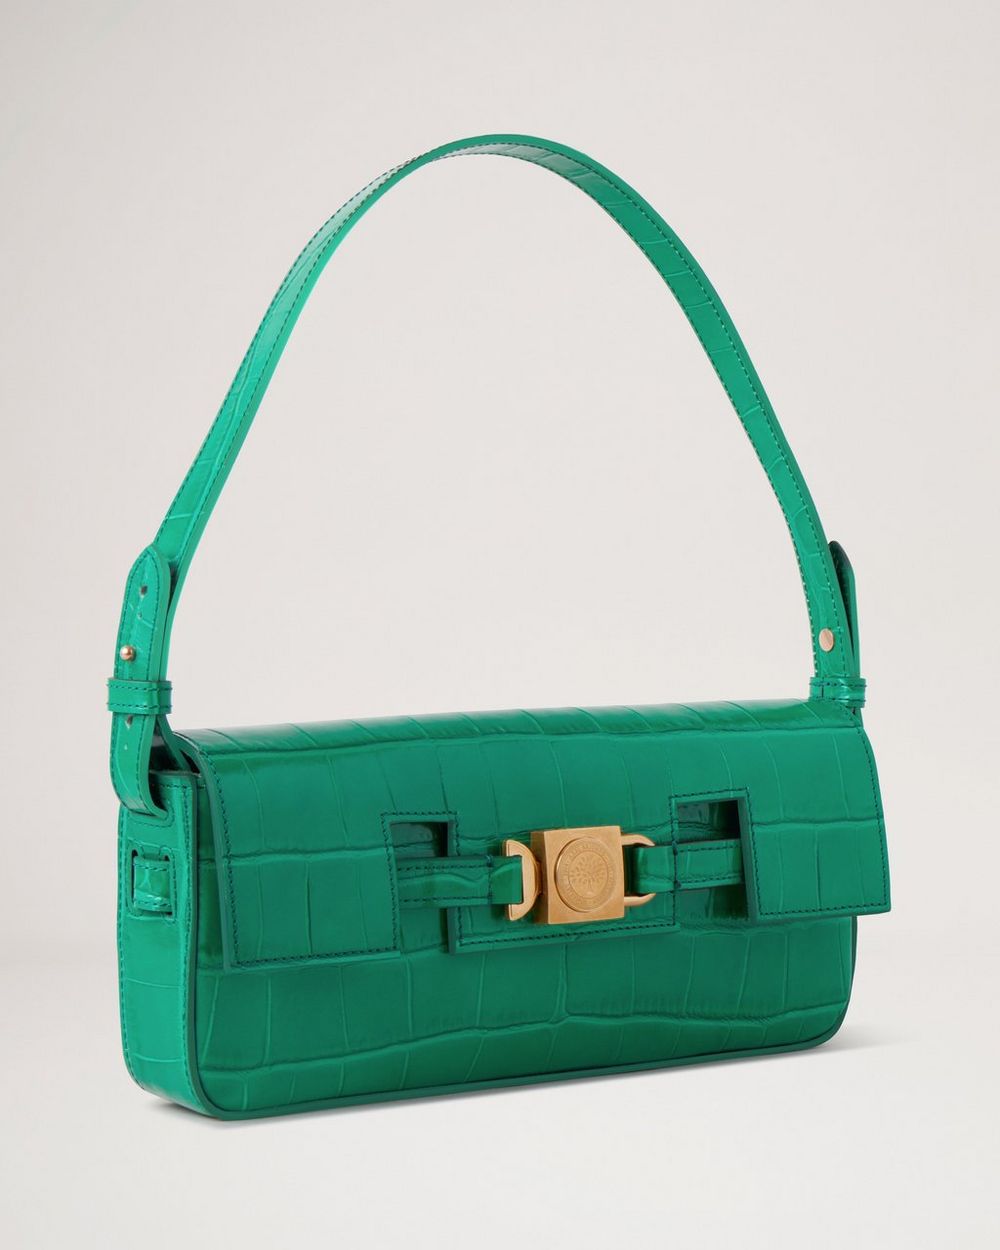 Fendi Baguette Micro Leather Shoulder Bag, $1,100